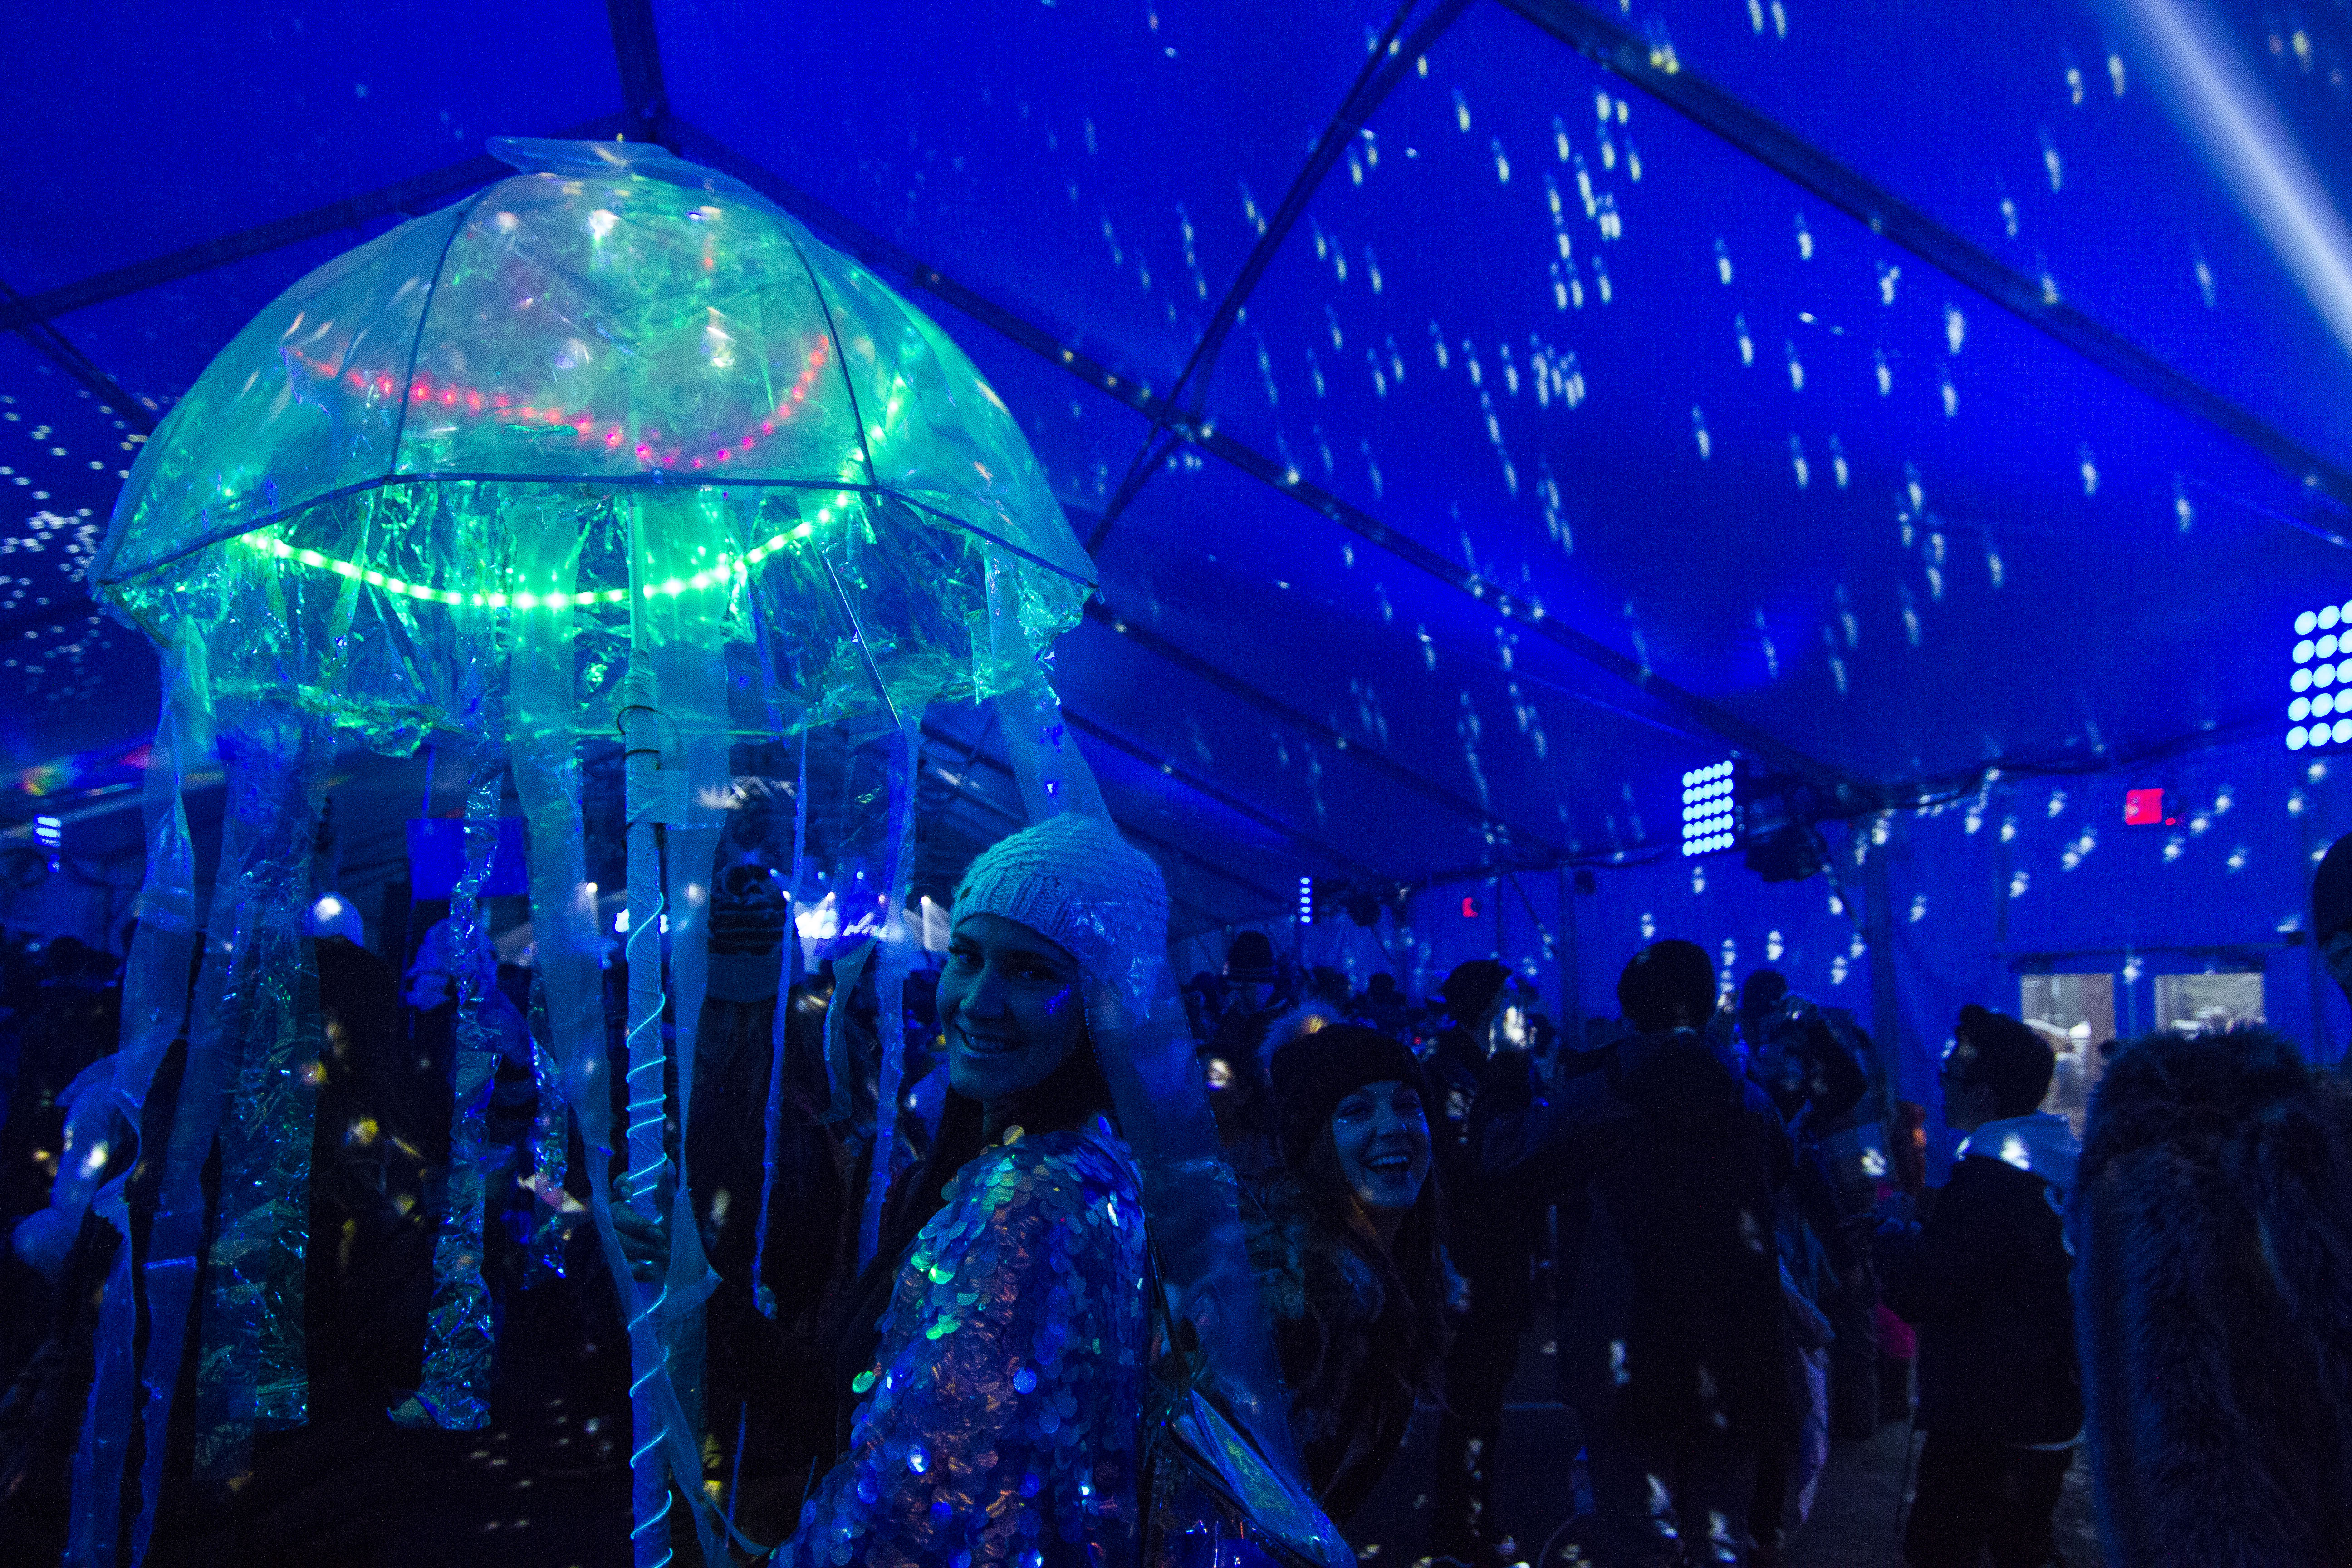 black light concert with a "jellyfish" umbrella